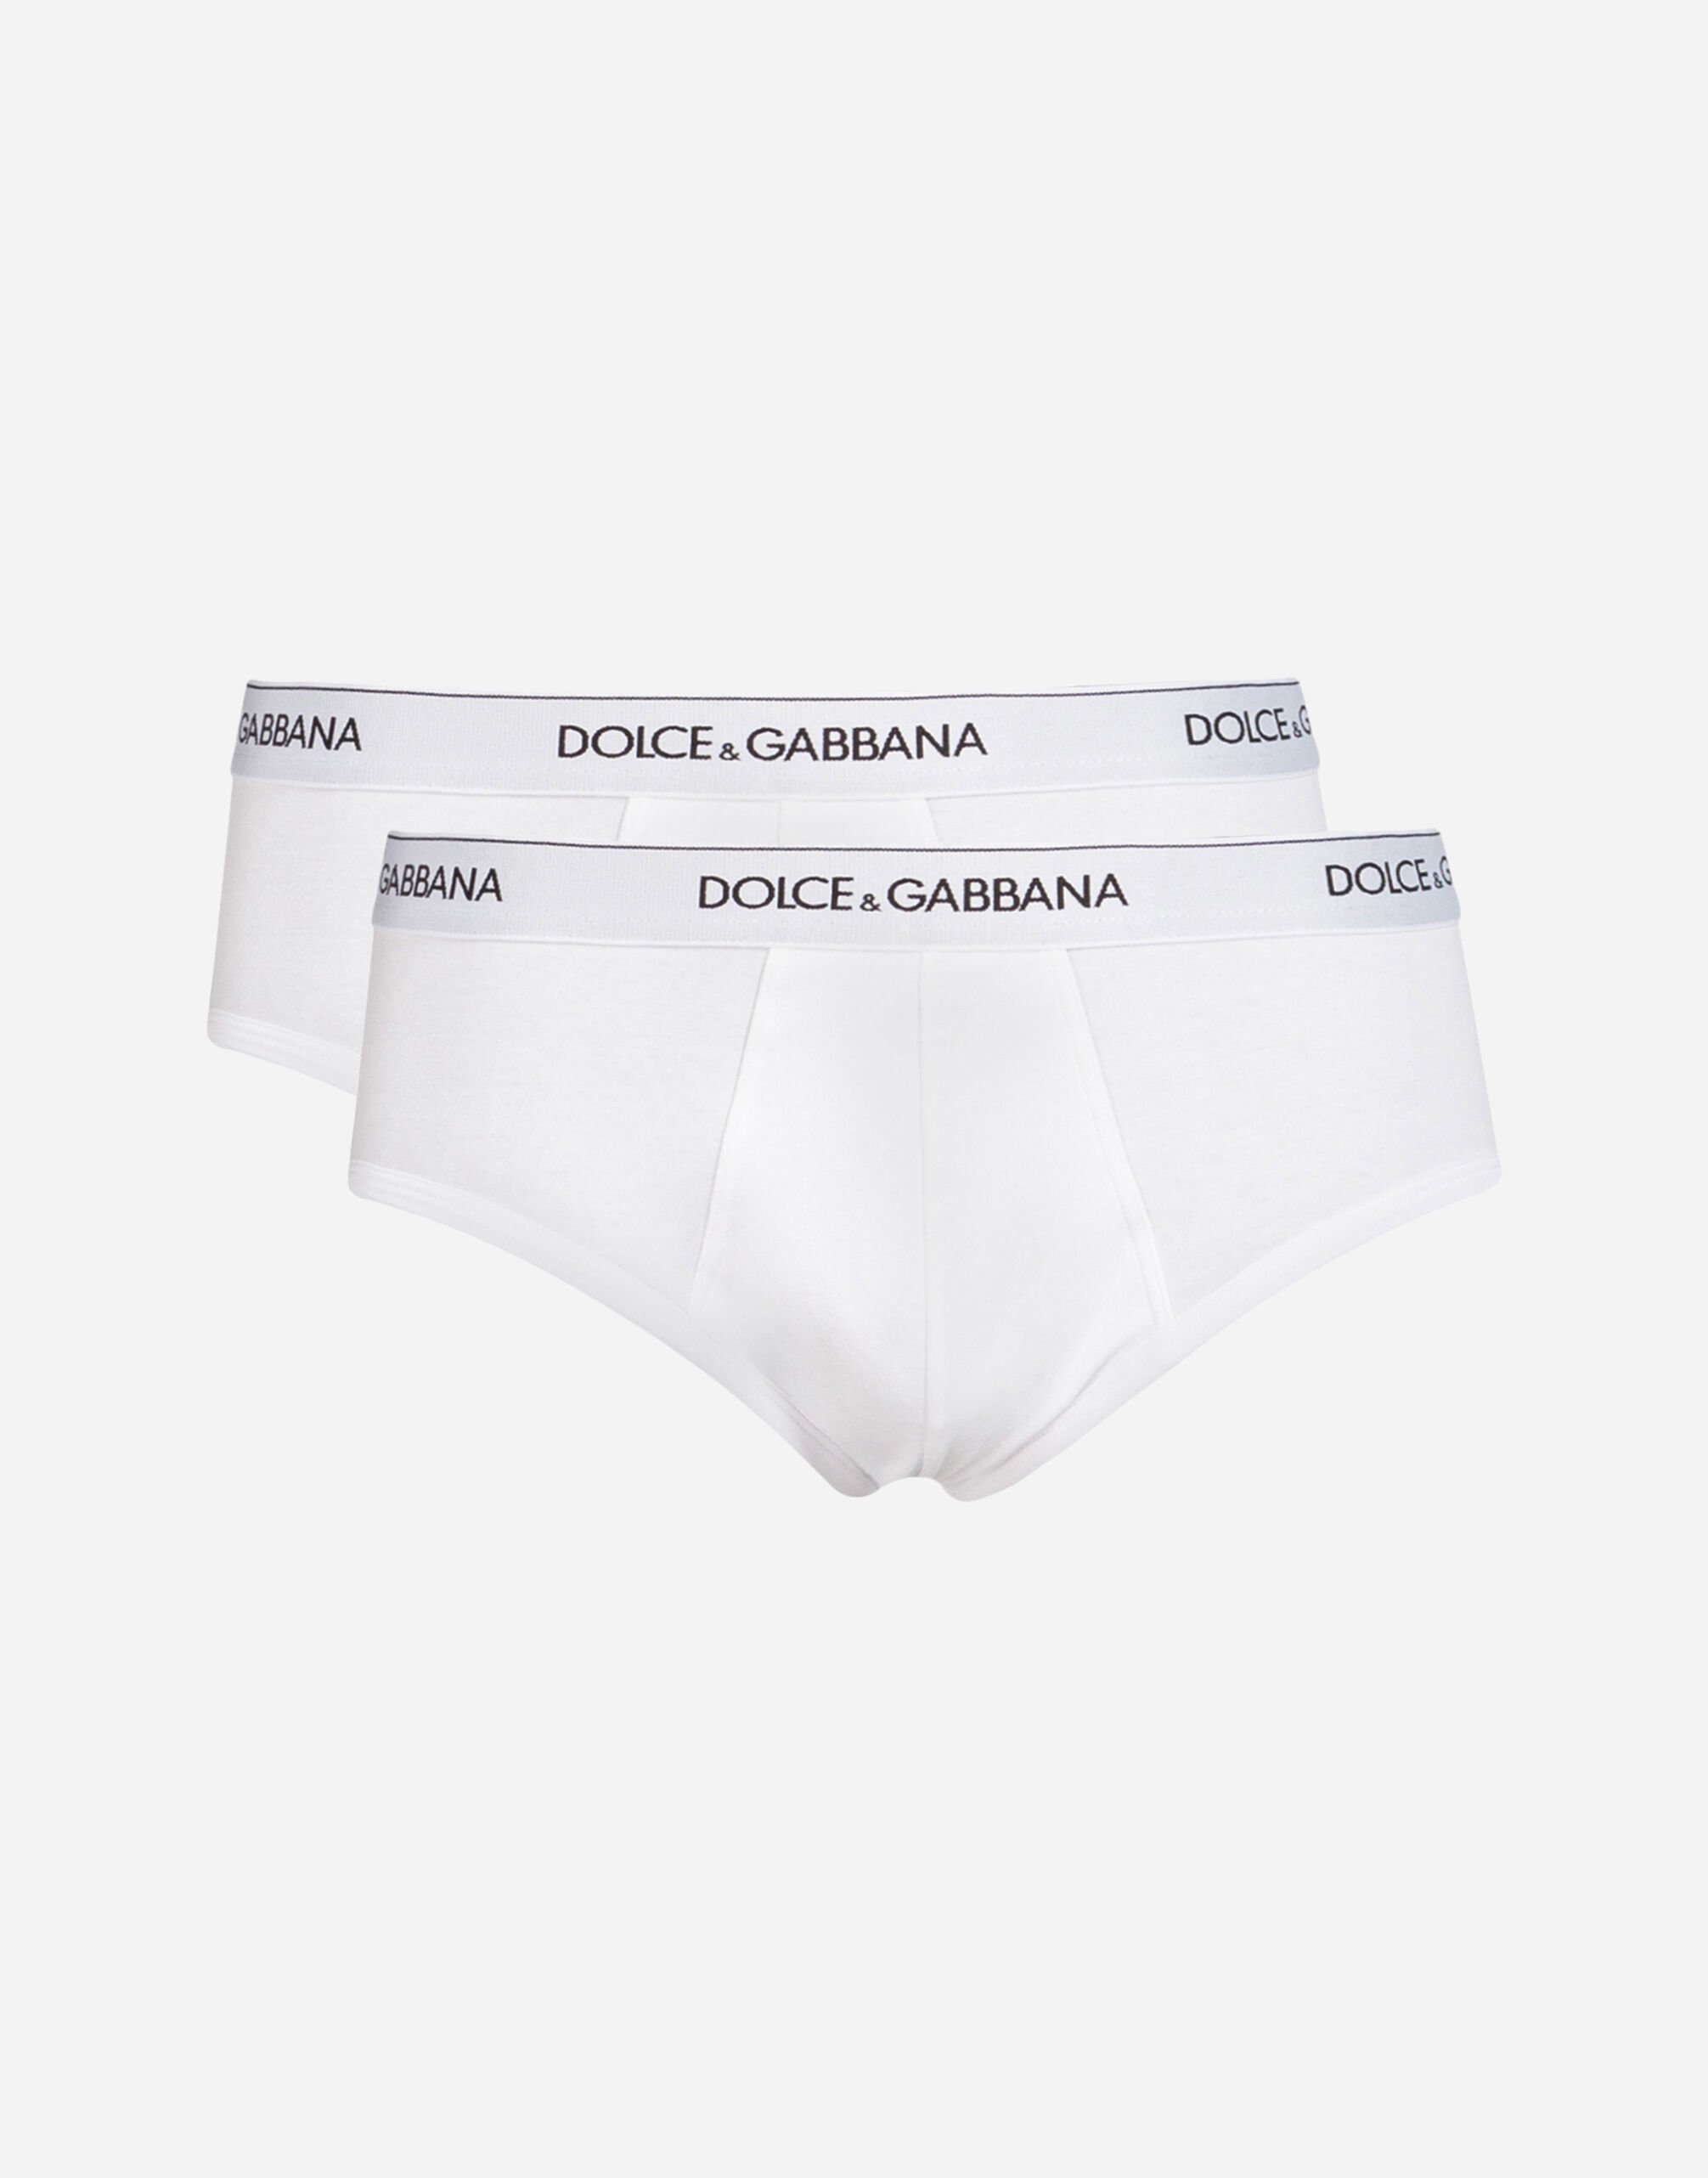 Dolce & Gabbana Pack de dos slips Brando de algodón elástico Negro M9C03JONN95